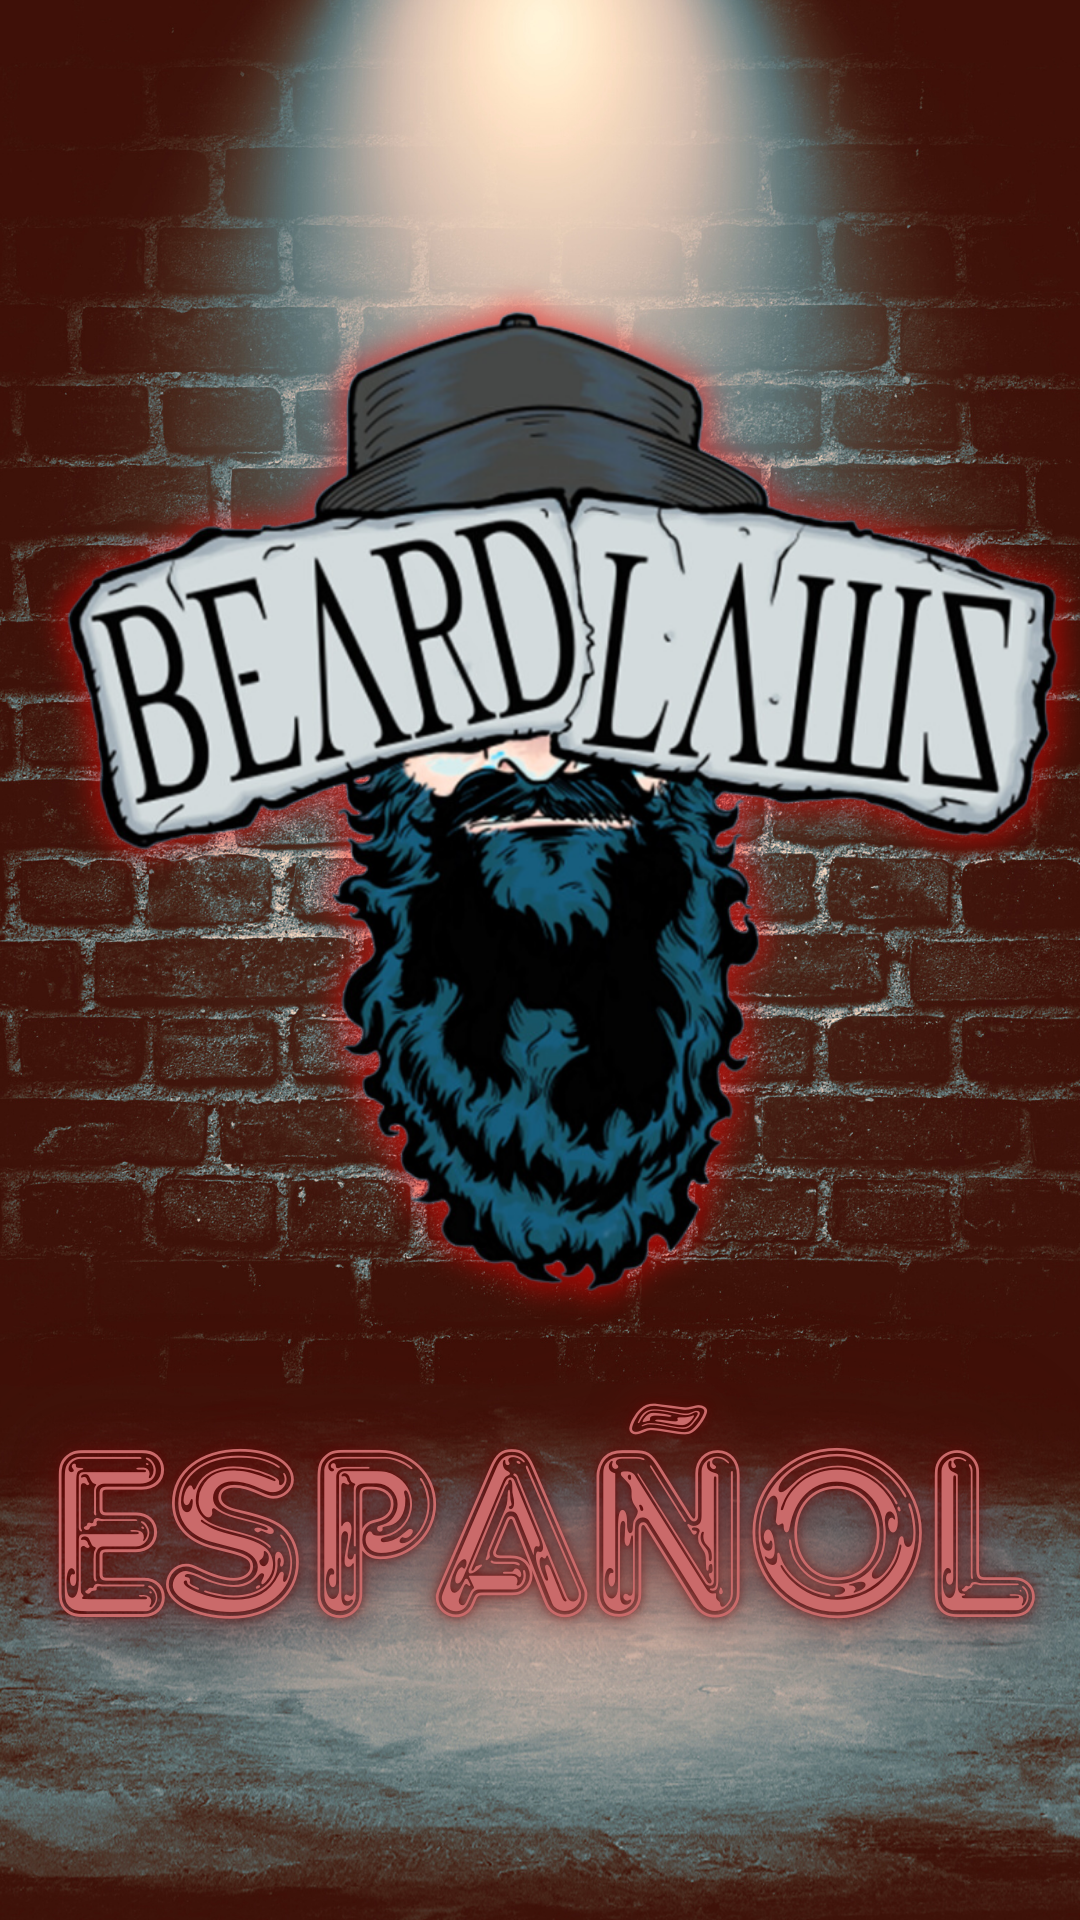 Beard Laws en Español